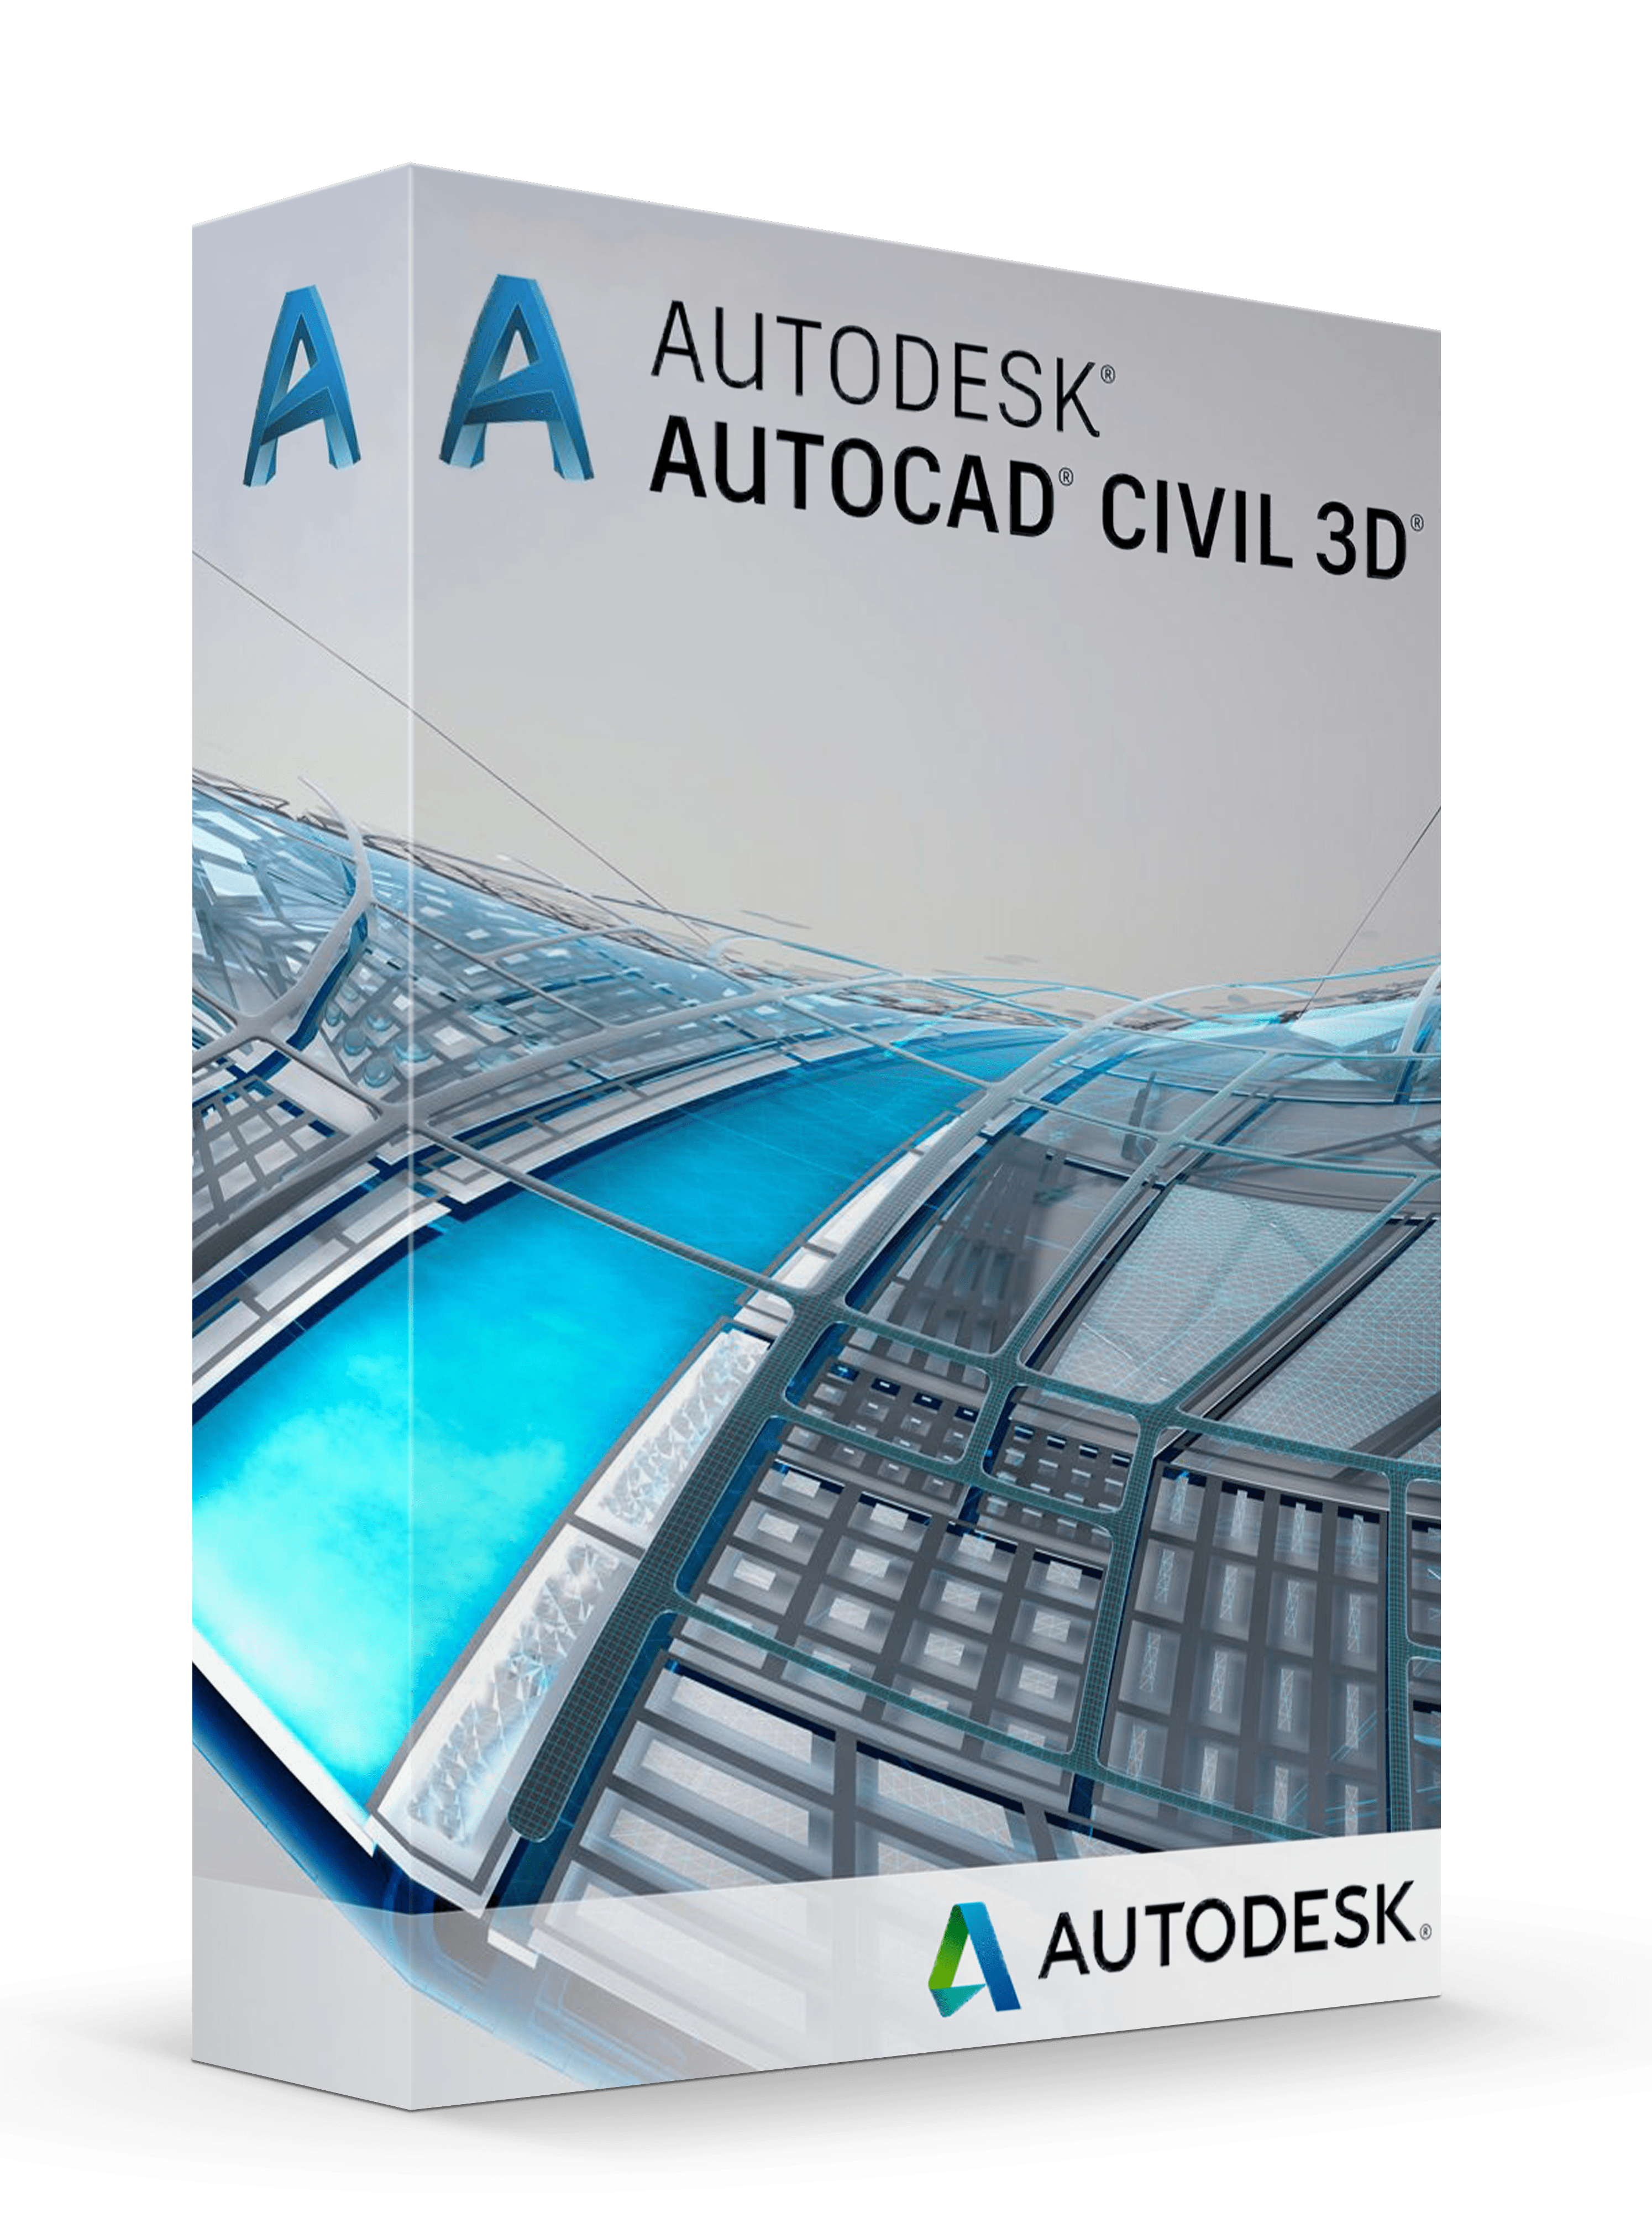 Autodesk civil 3d requirements dropkop